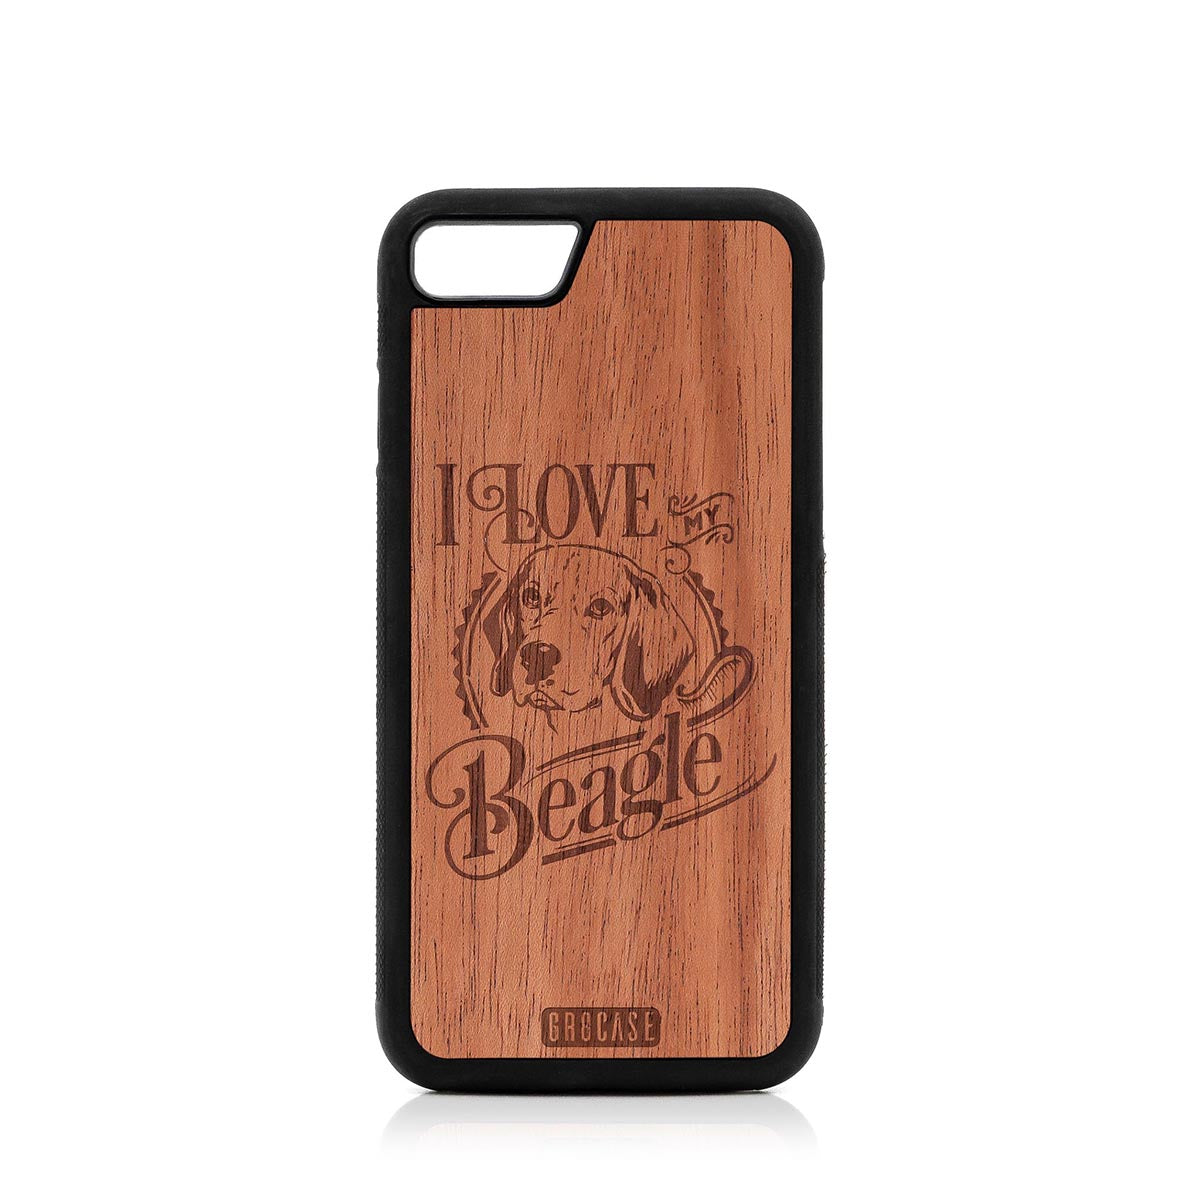 I Love My Beagle Design Wood Case For iPhone 7/8/SE by GR8CASE